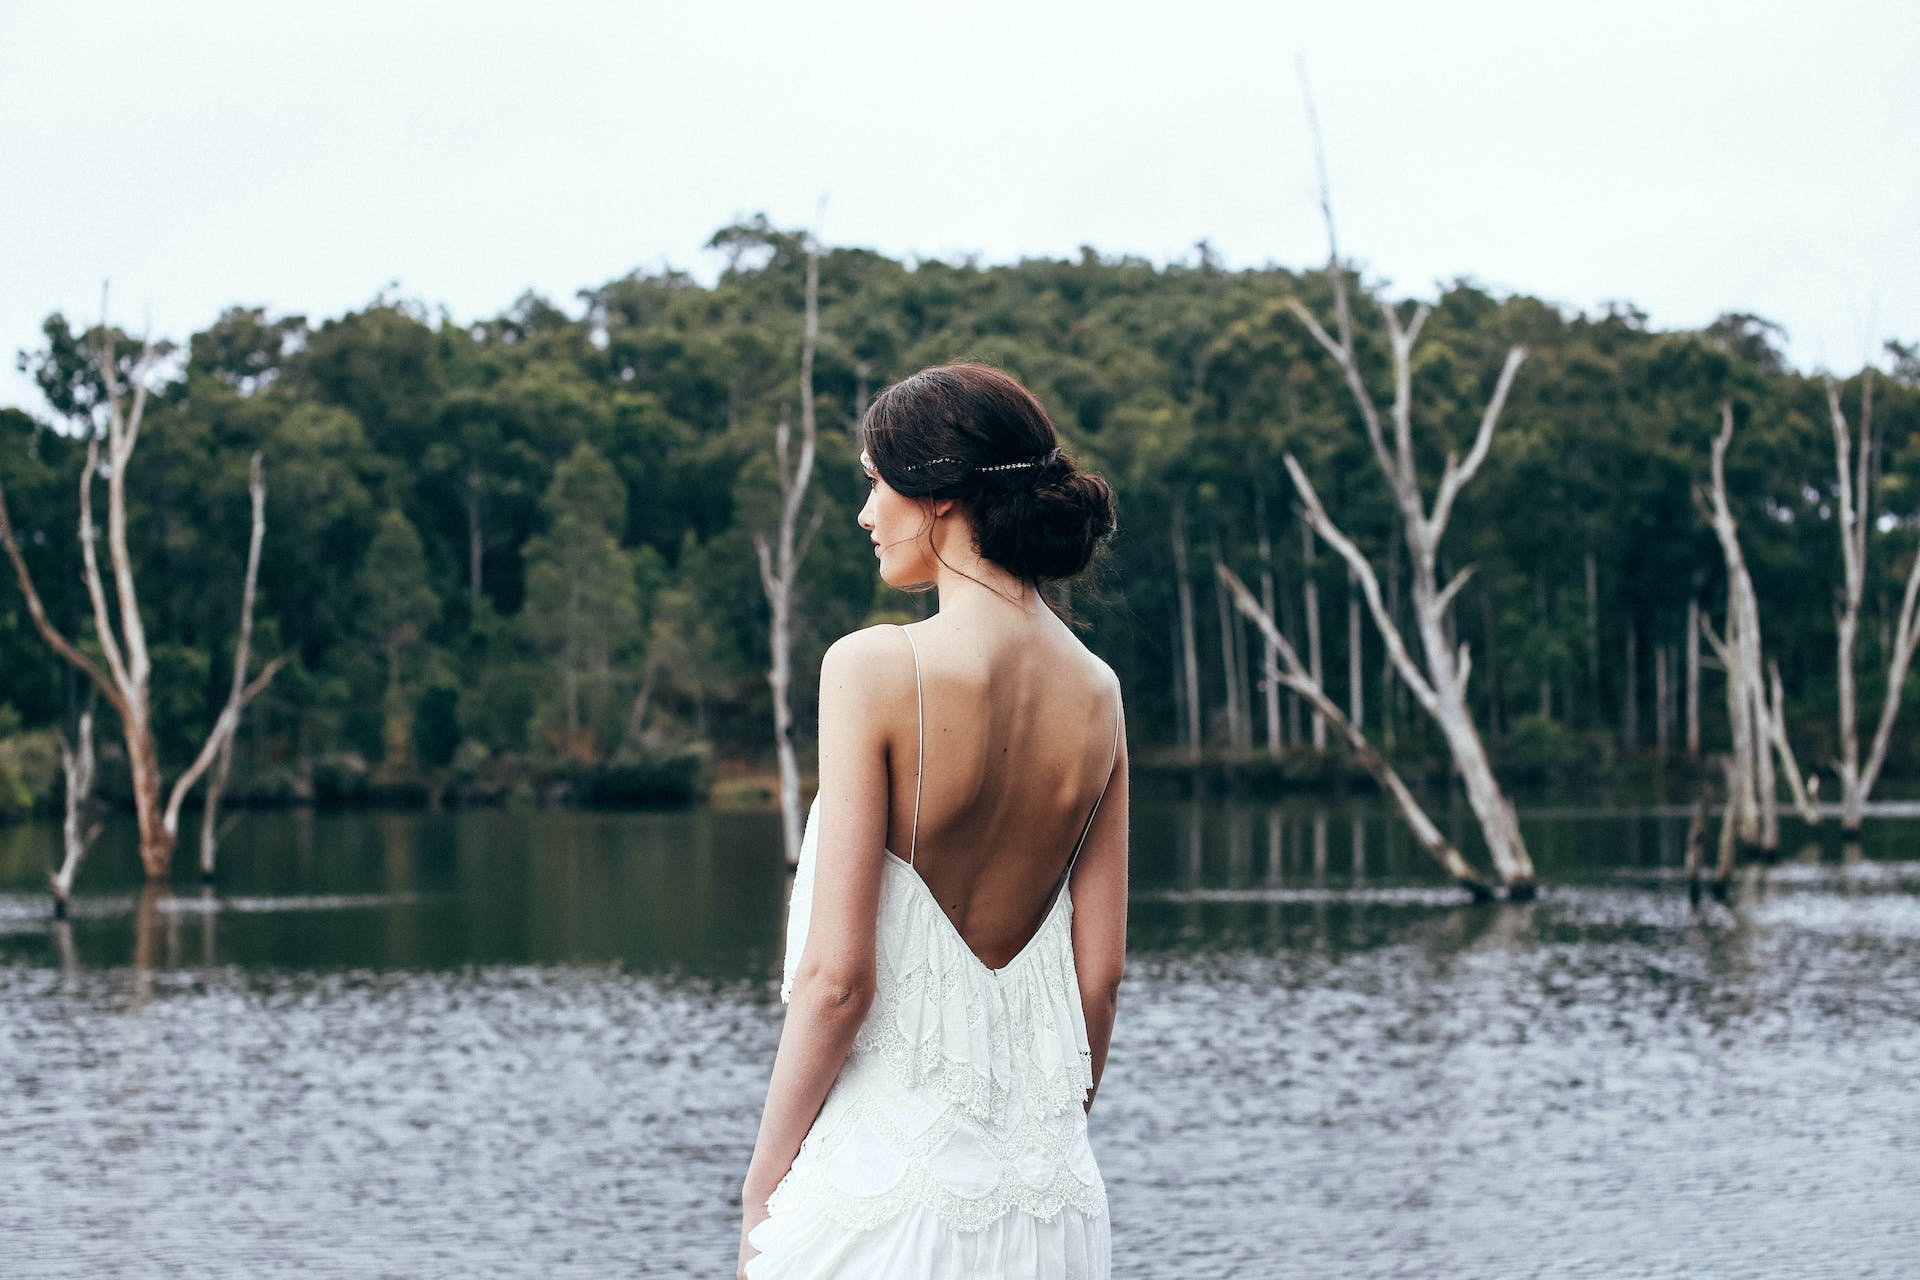 A bride standing near a lake | Source: Pexels